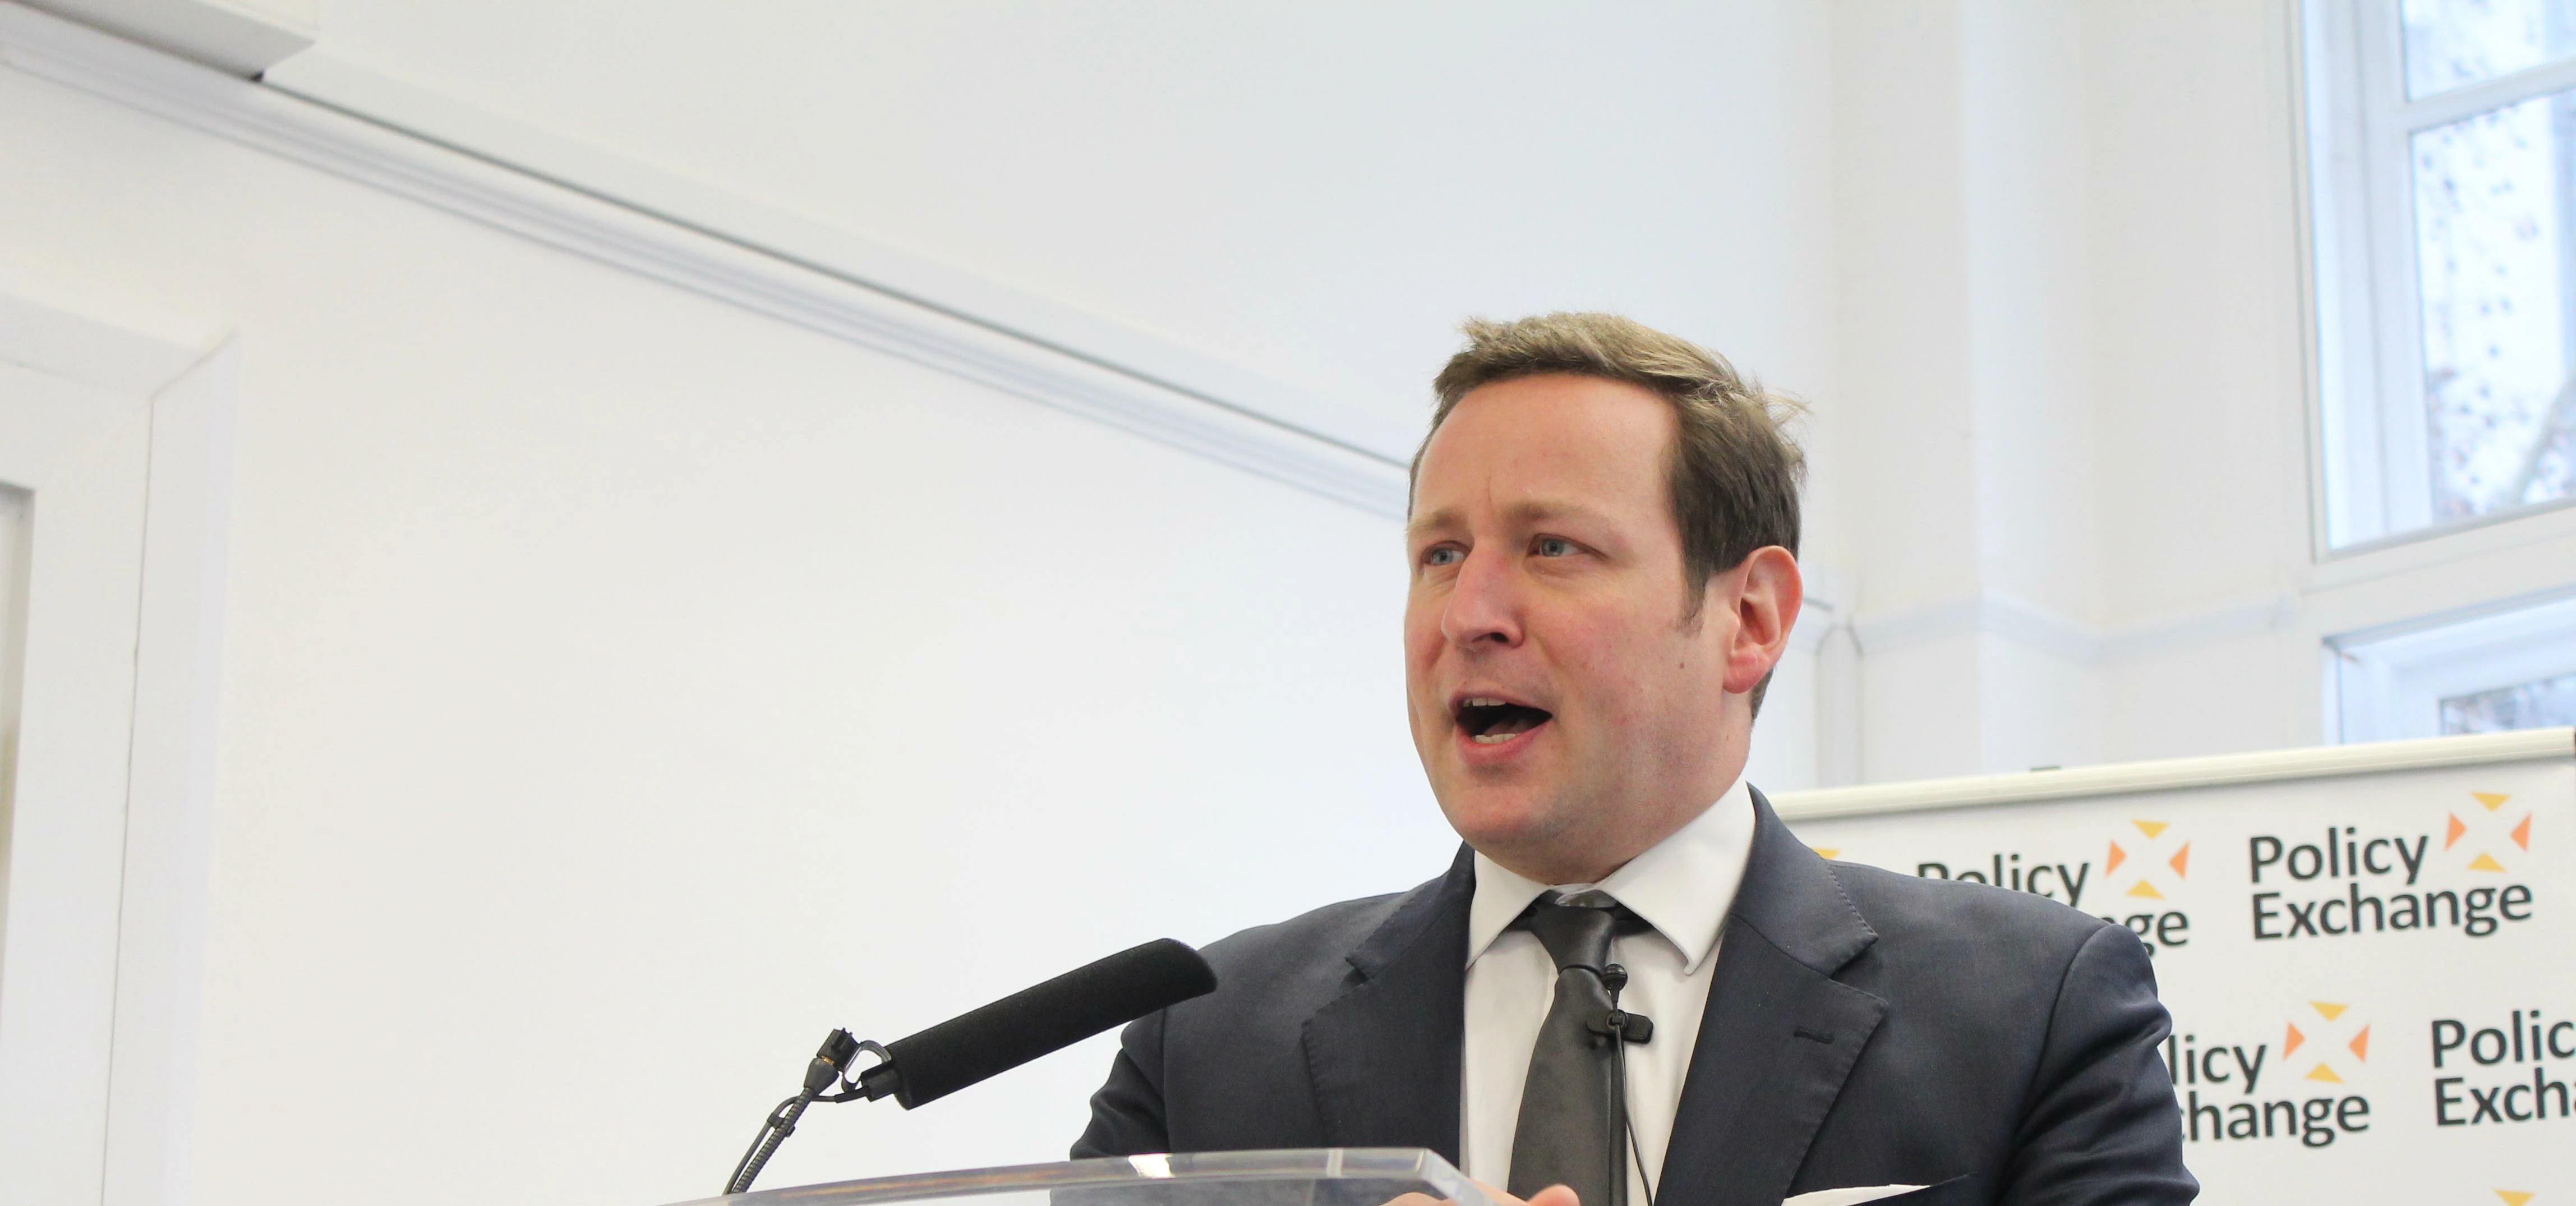 Internet minister Ed Vaizey MP at Broadband Beyond 2015: Where Next for Britain's Broadband Future?